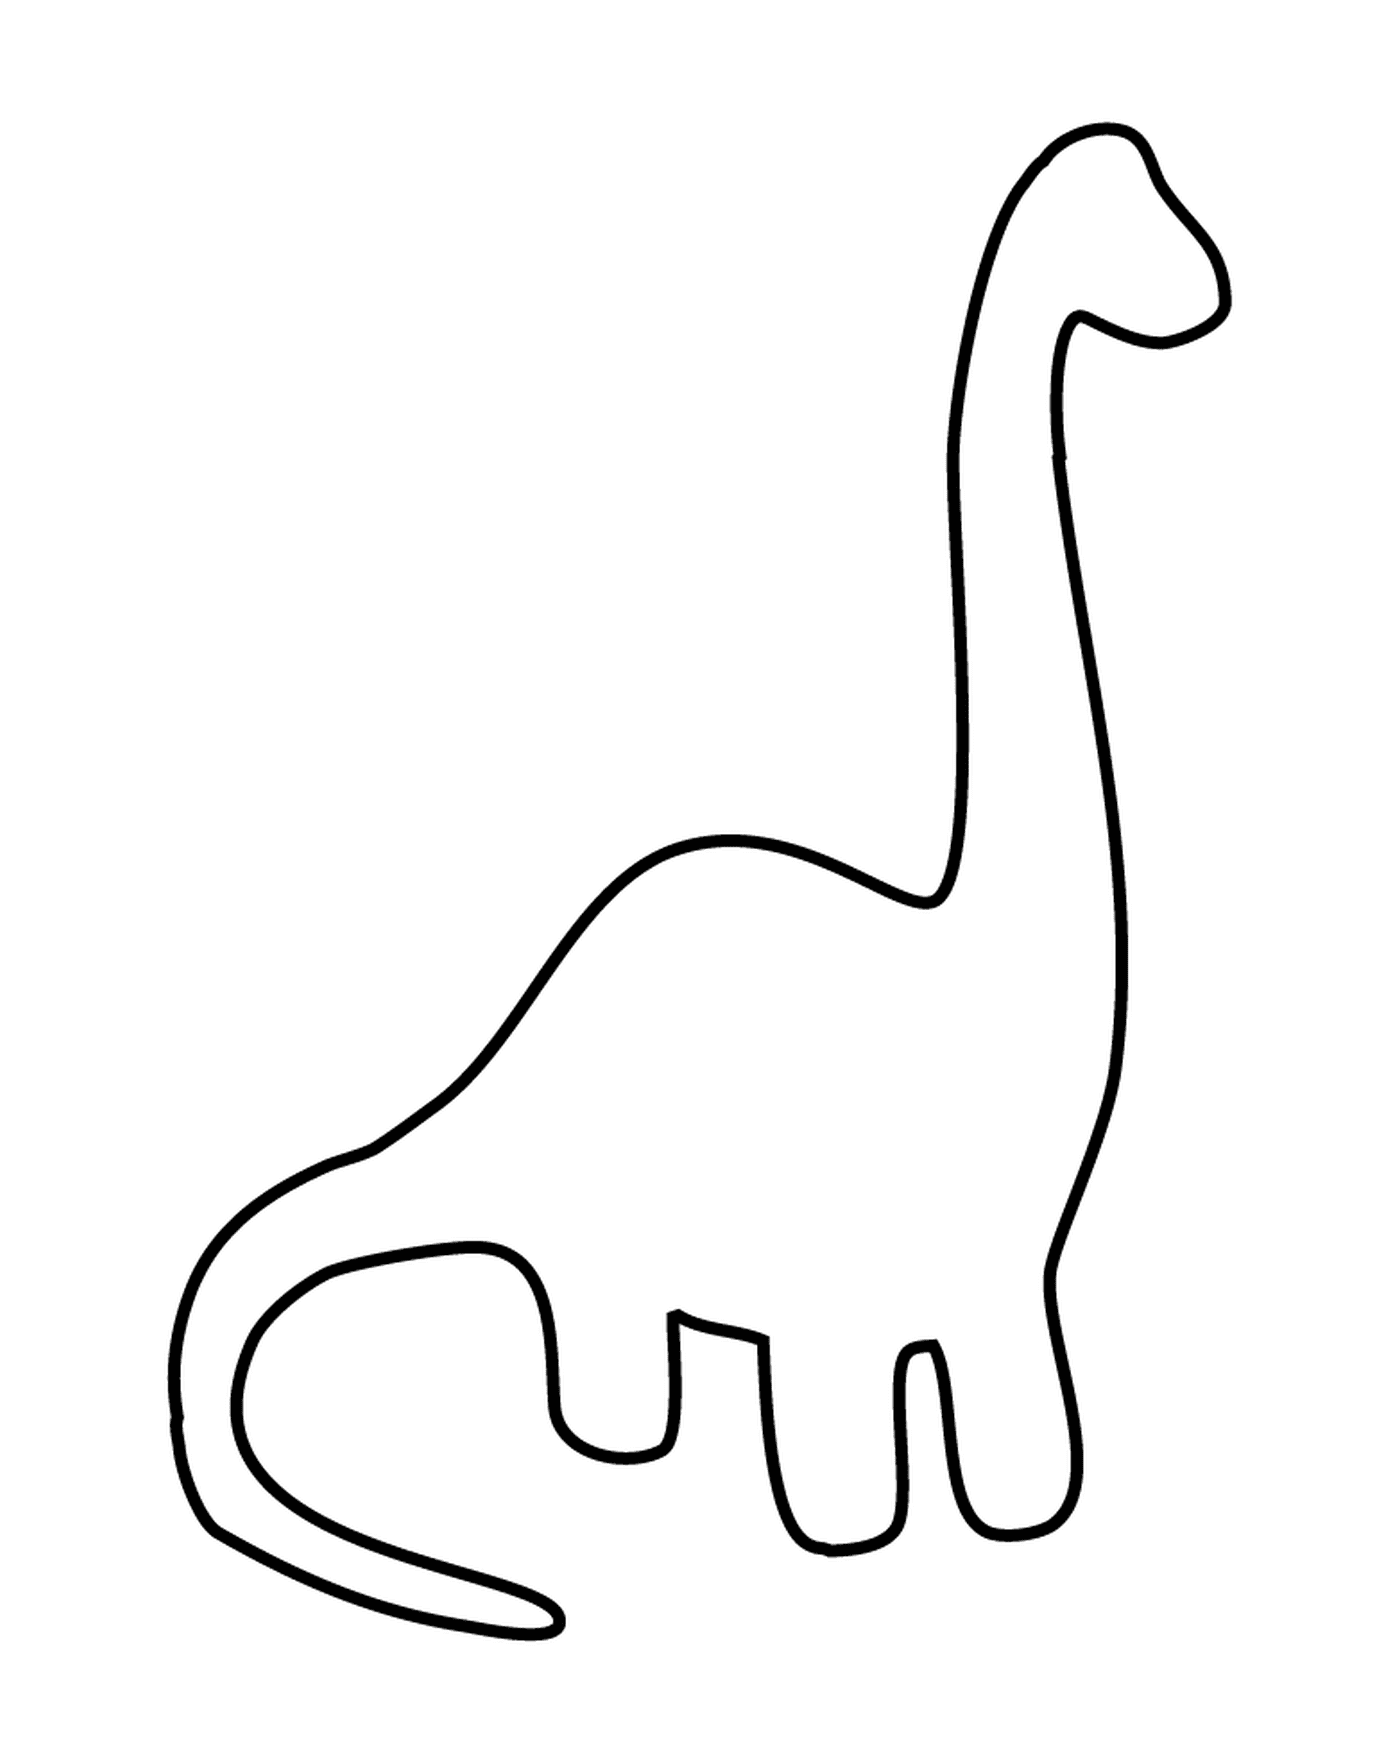  A black-and-white dinosaur outline 